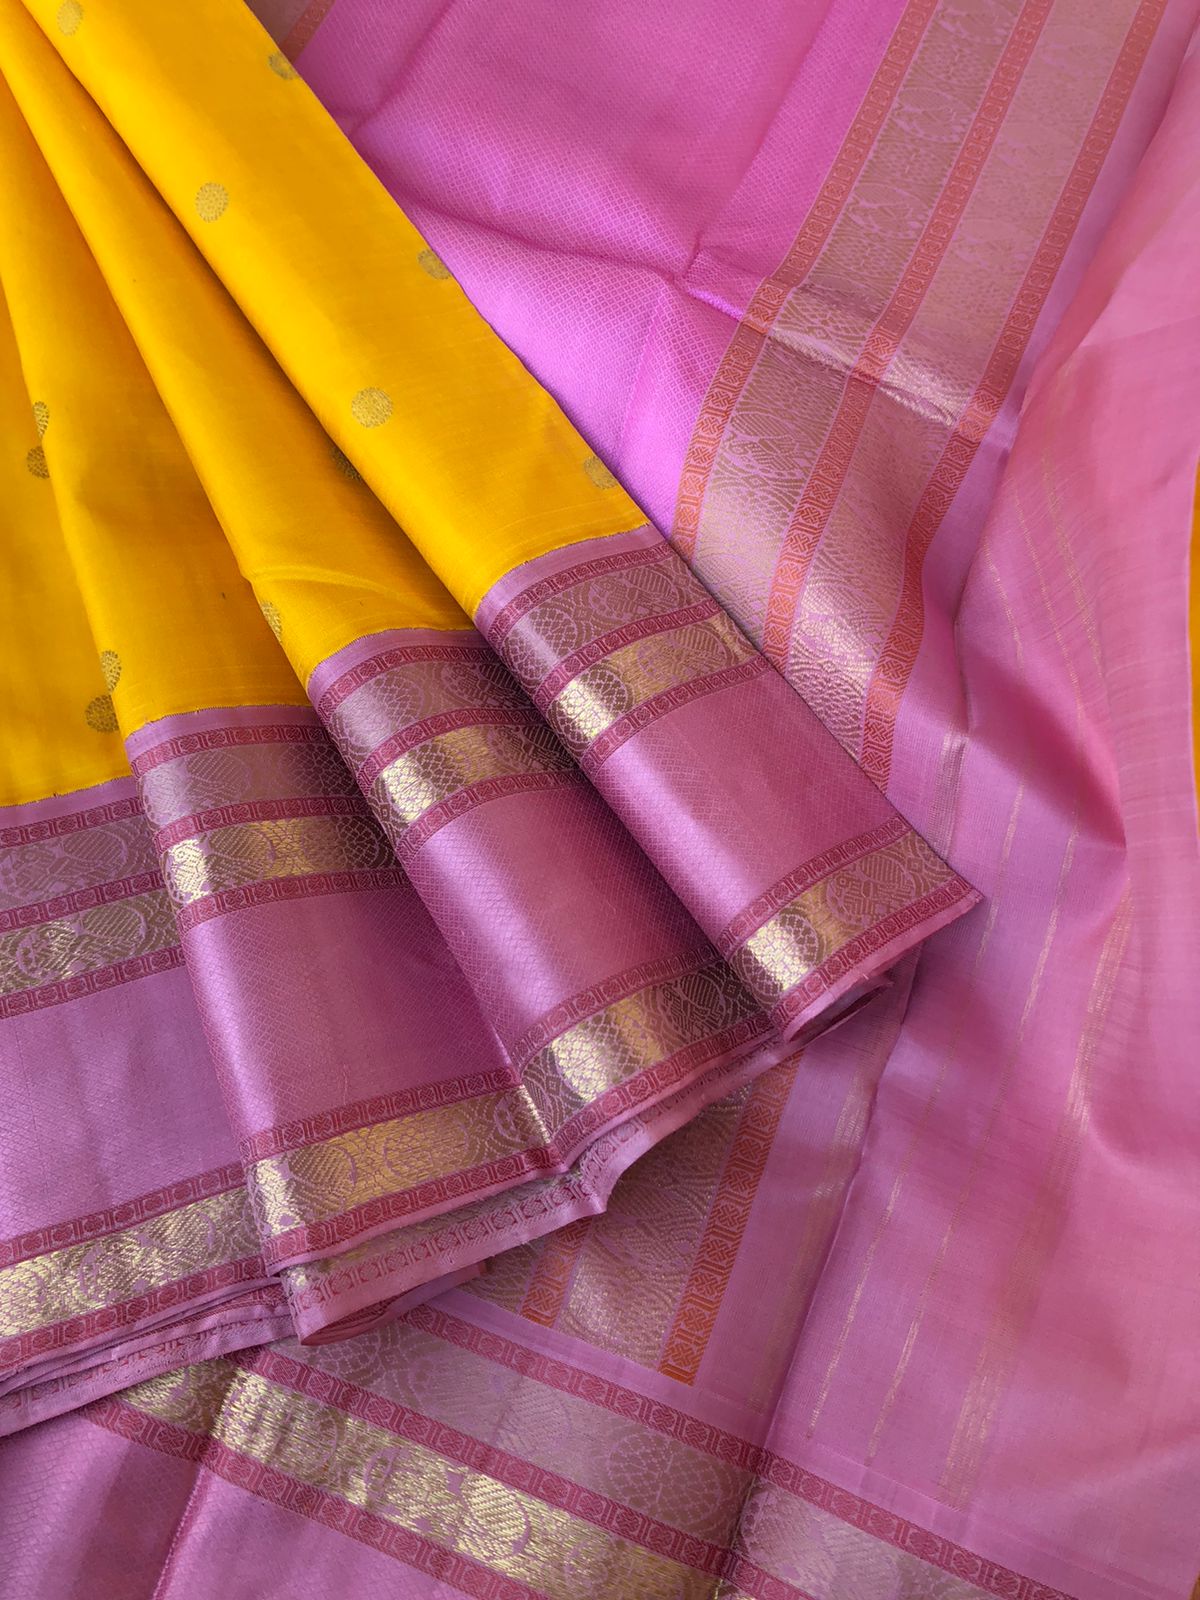 Meenakshi Kalayanam - Authentic Korvai Kanchivarams - gorgeous golden yellow and dusky pink